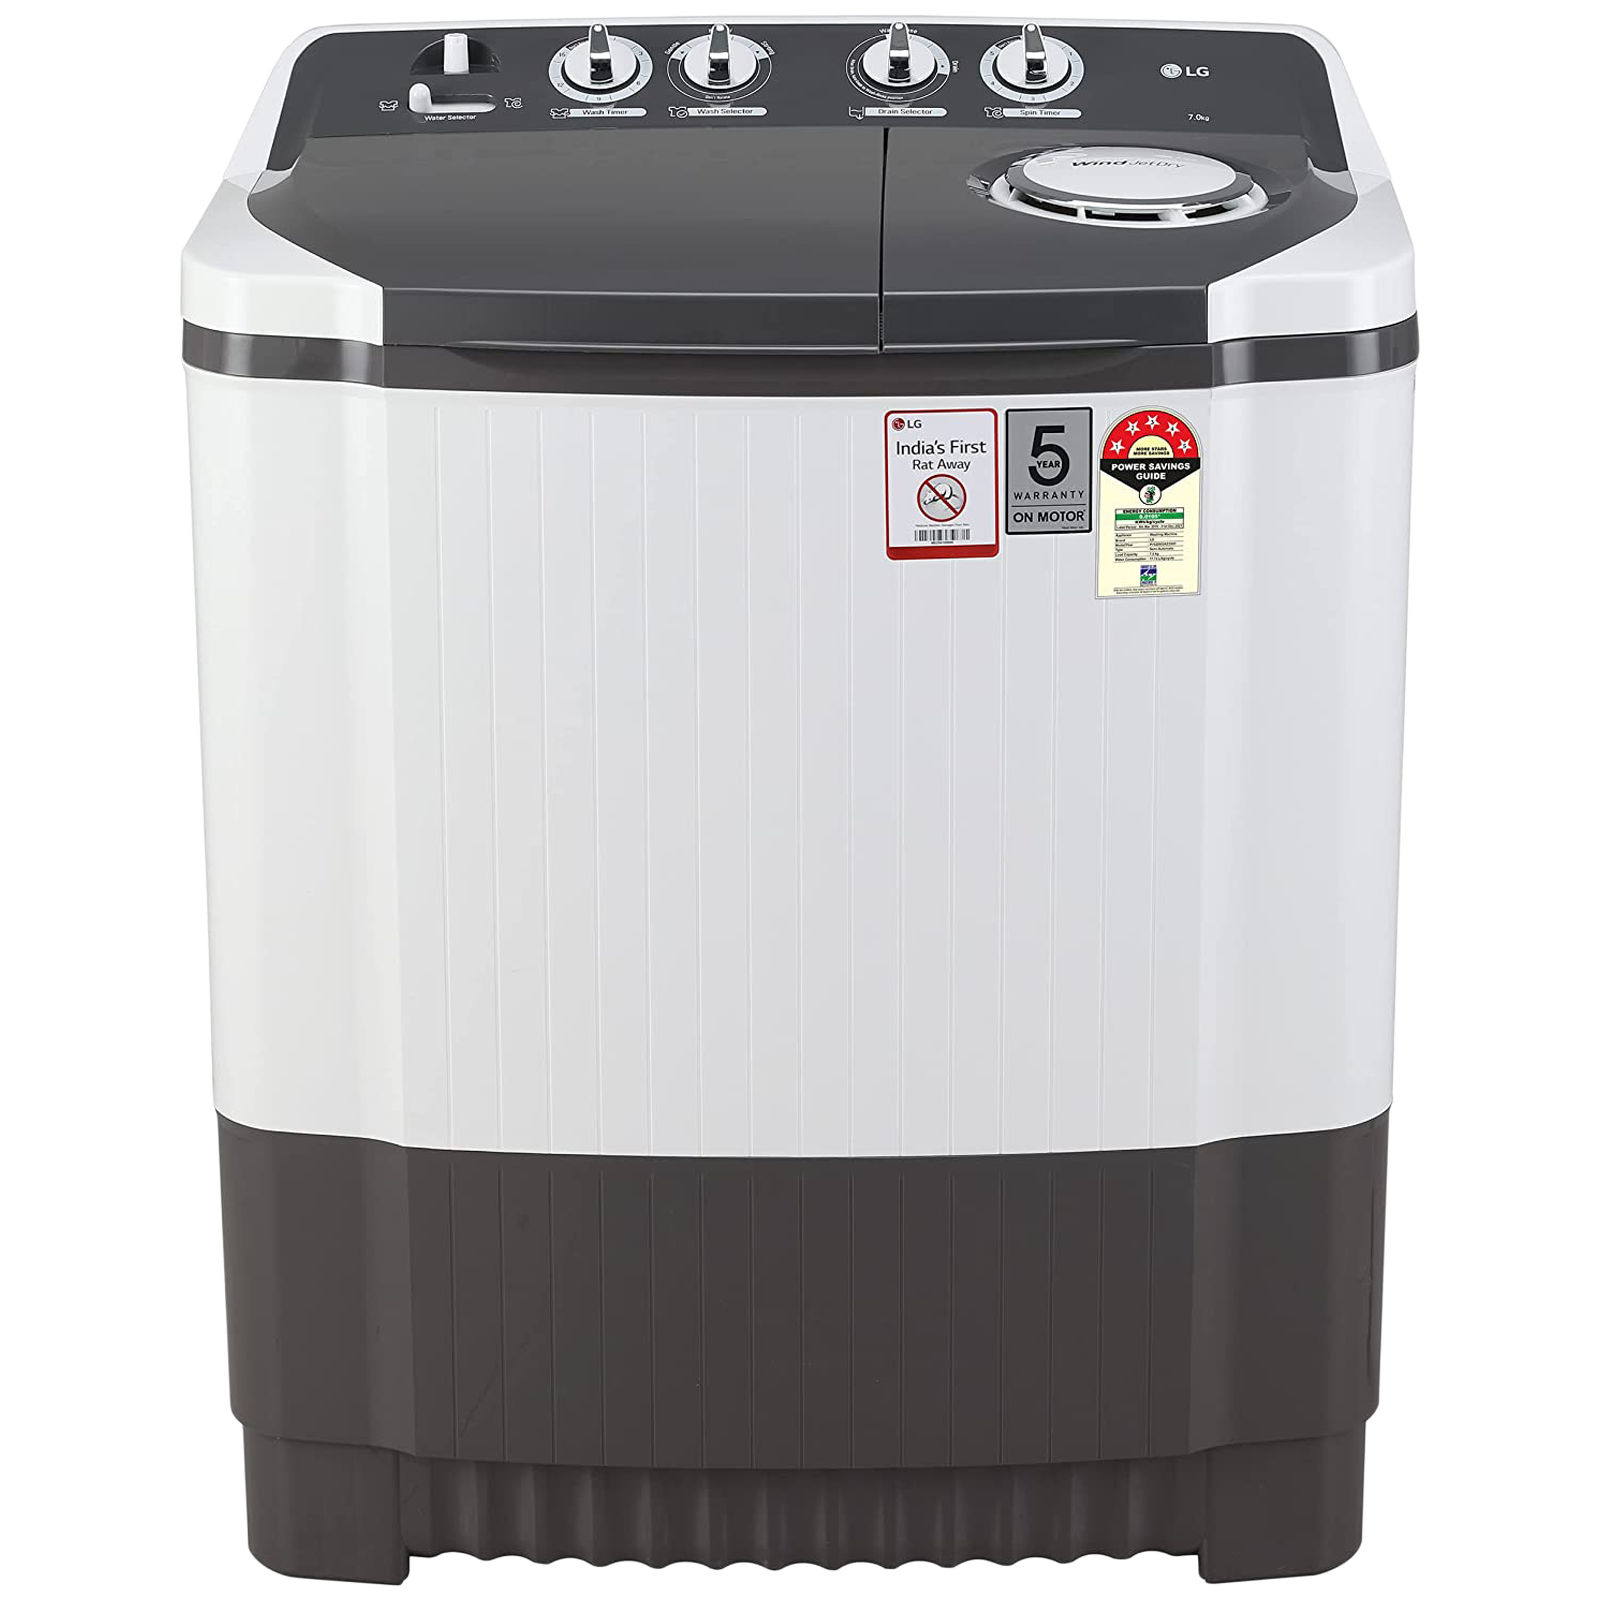 LG 7 kg 5 Star Semi-Automatic Top Load Washing Machine (Rat Away Technology with 3 Wash Programs, P7020NGAZ, Dark Grey)_1